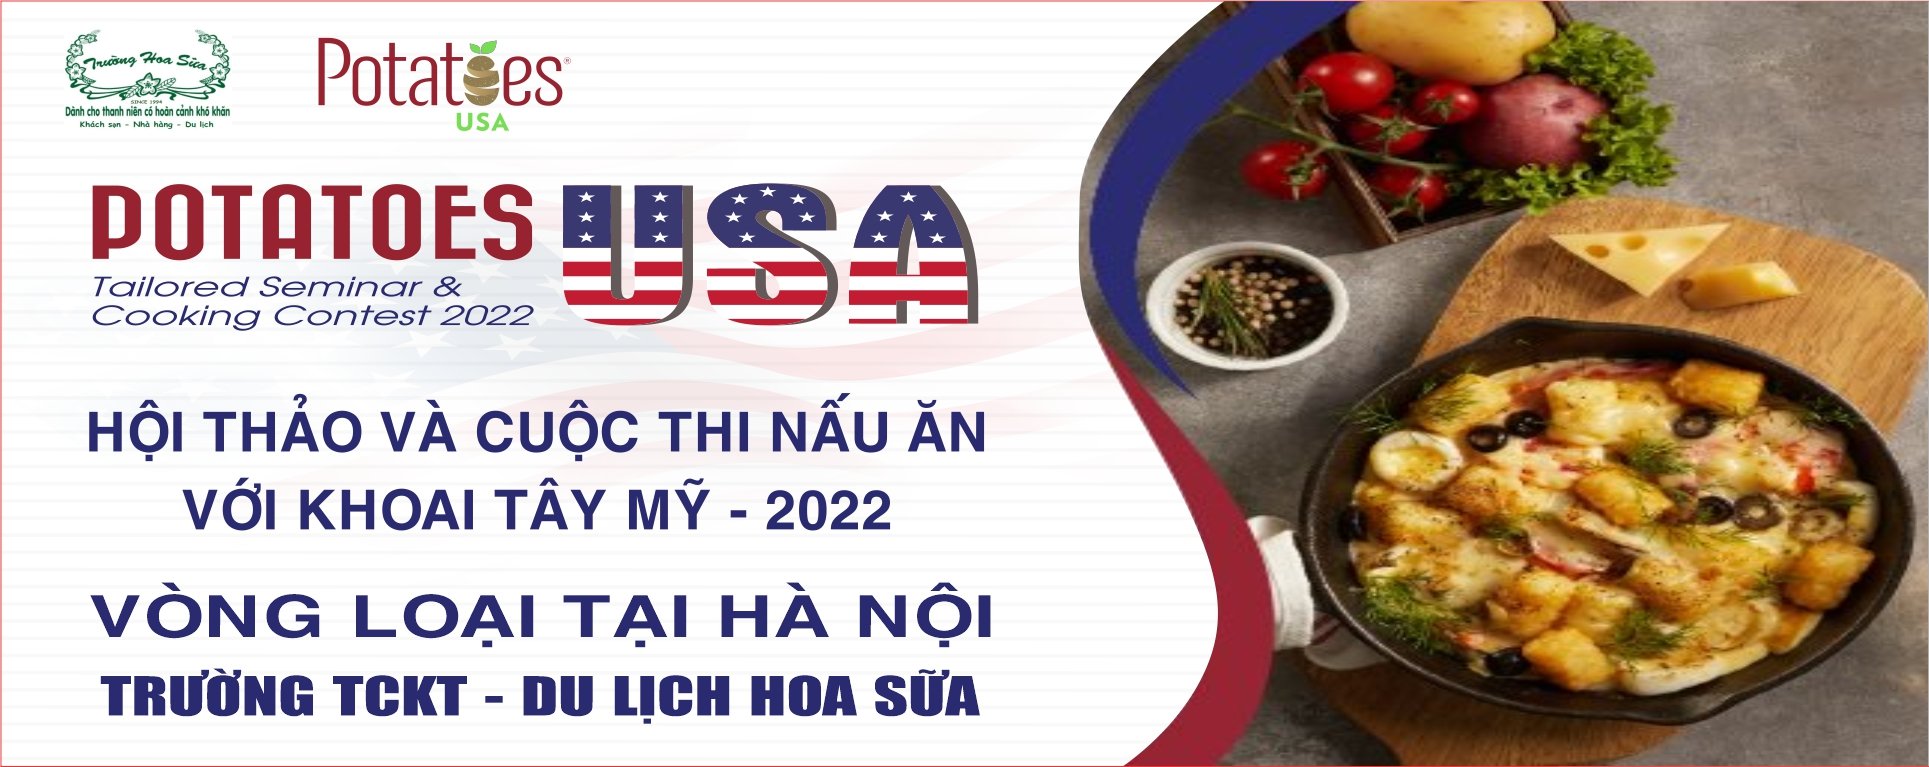 POTATOES USA – TAILORED  SEMINAR & COOKING CONTEST 2022  -  SỰ KIỆN HOT SẮP DIỄN RA